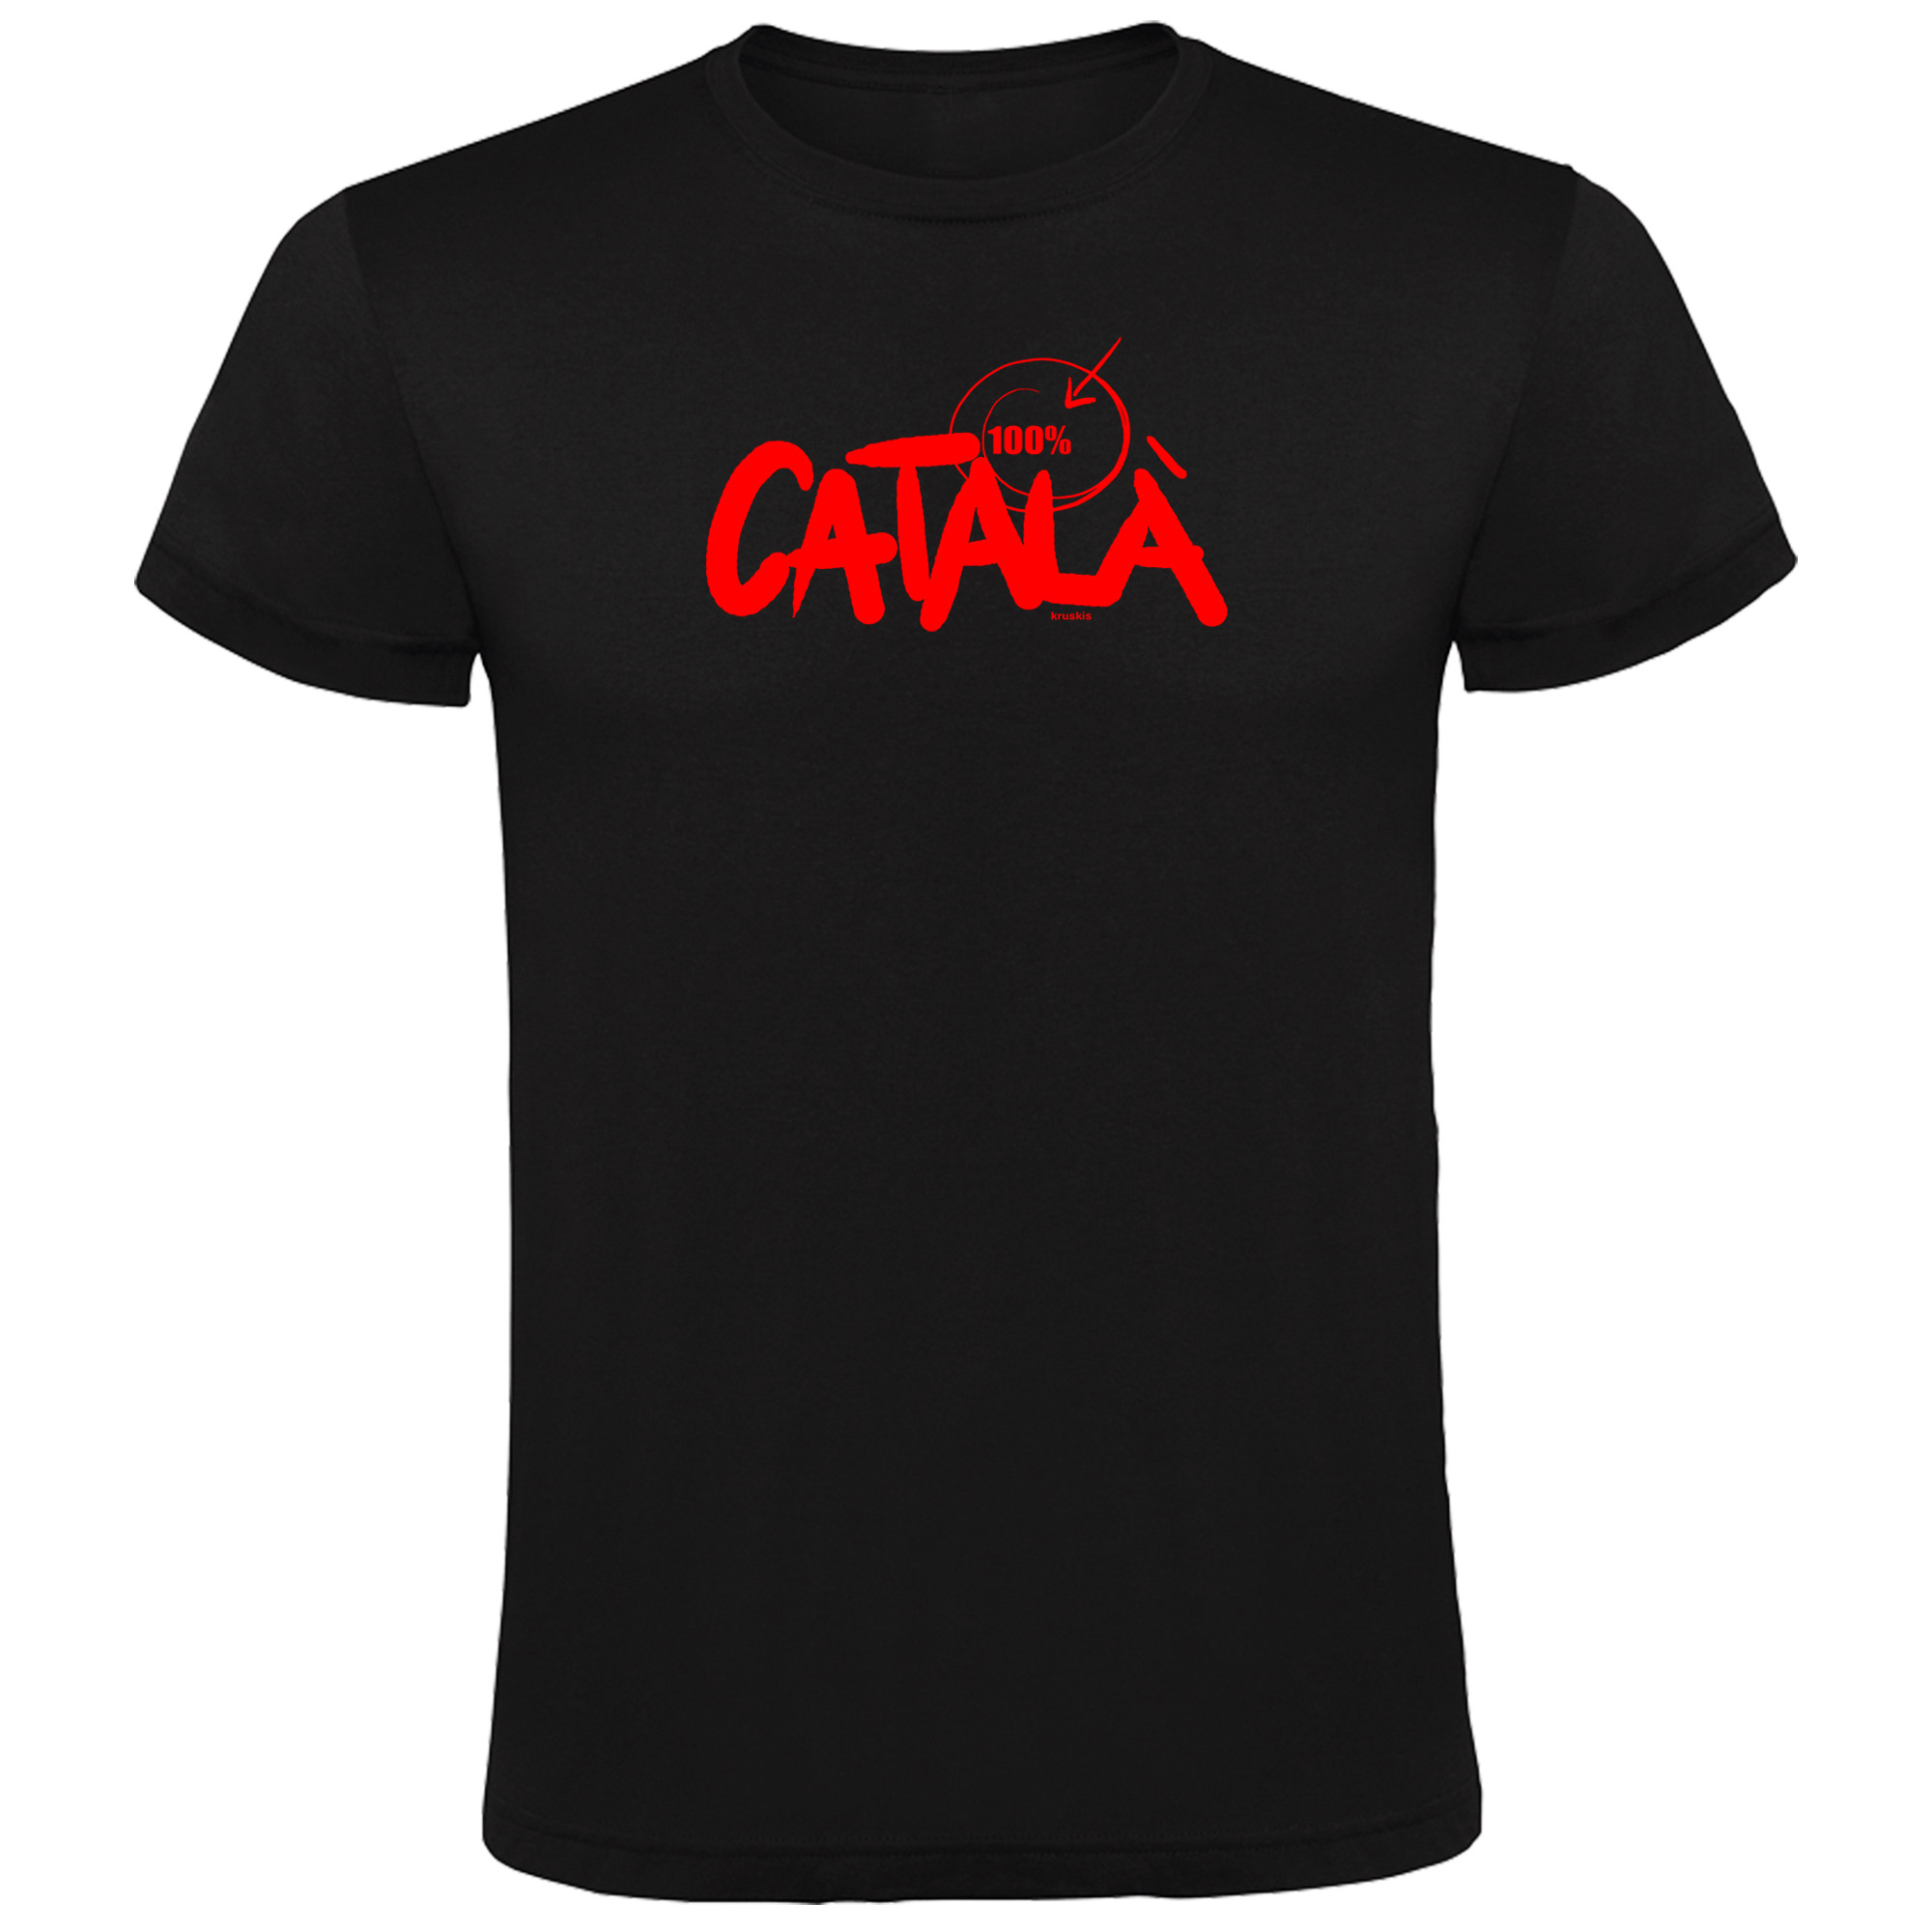 T Shirt Catalonia 100% Catala Short Sleeves Man